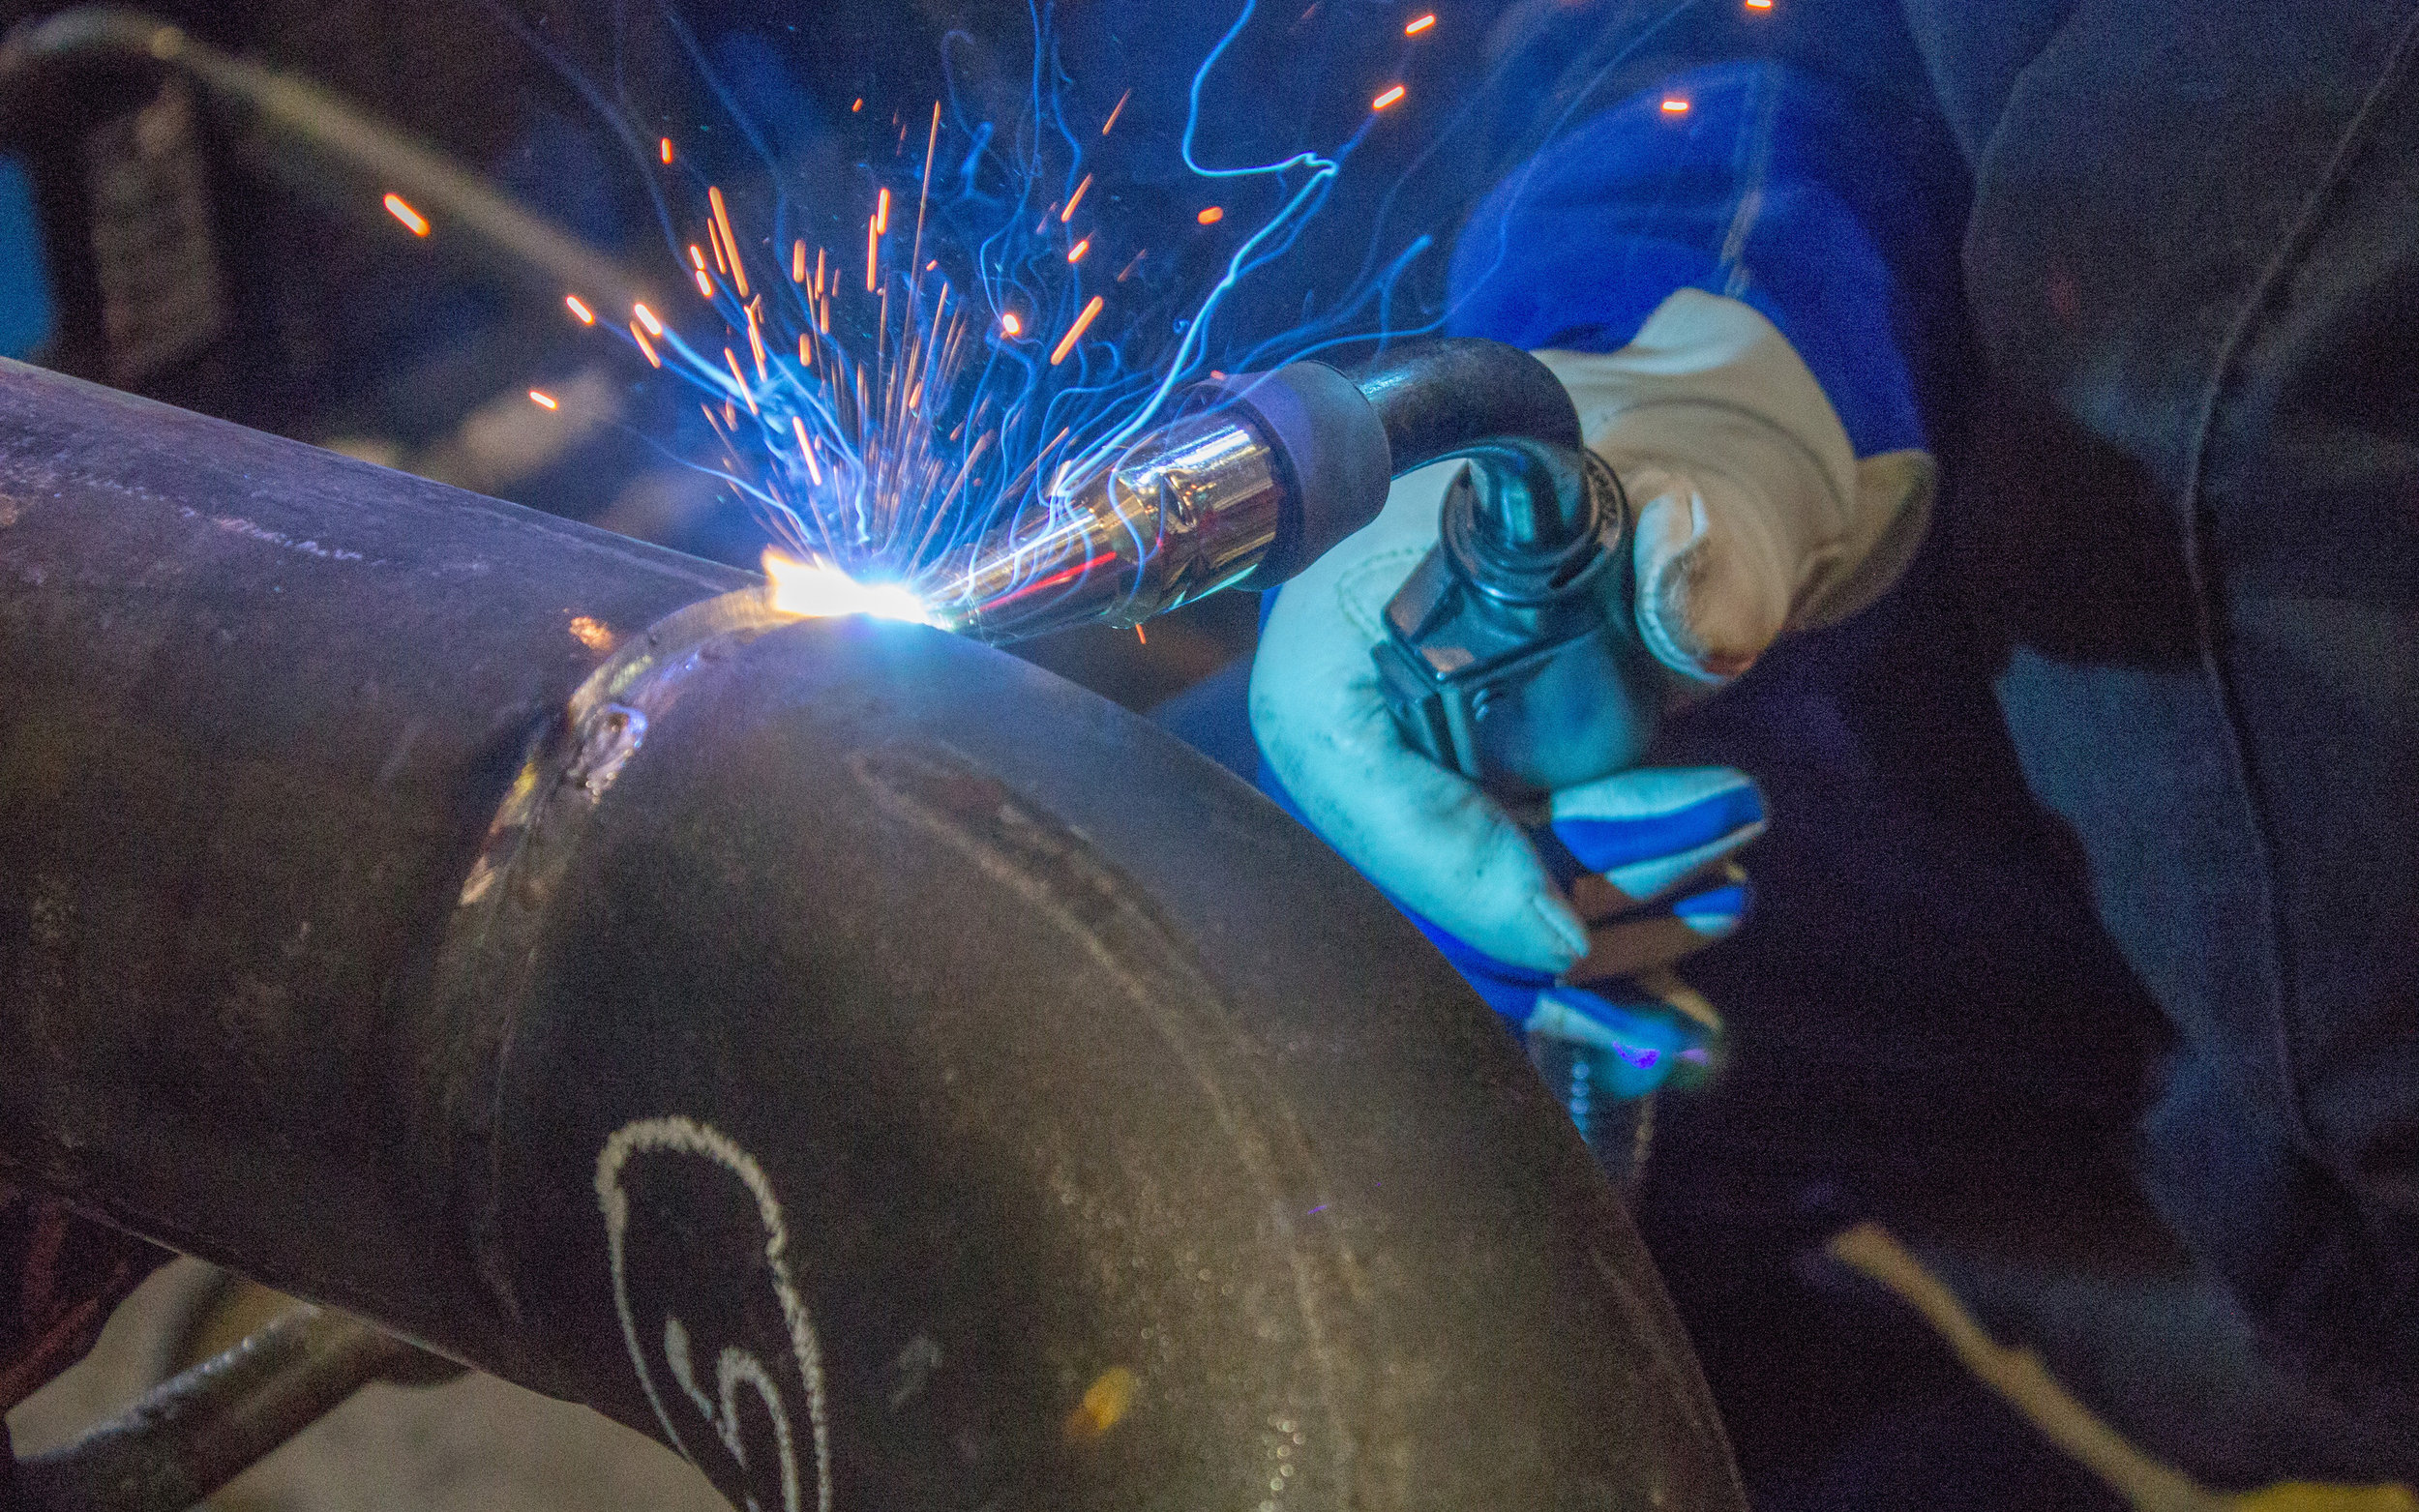 A man welding a pipe